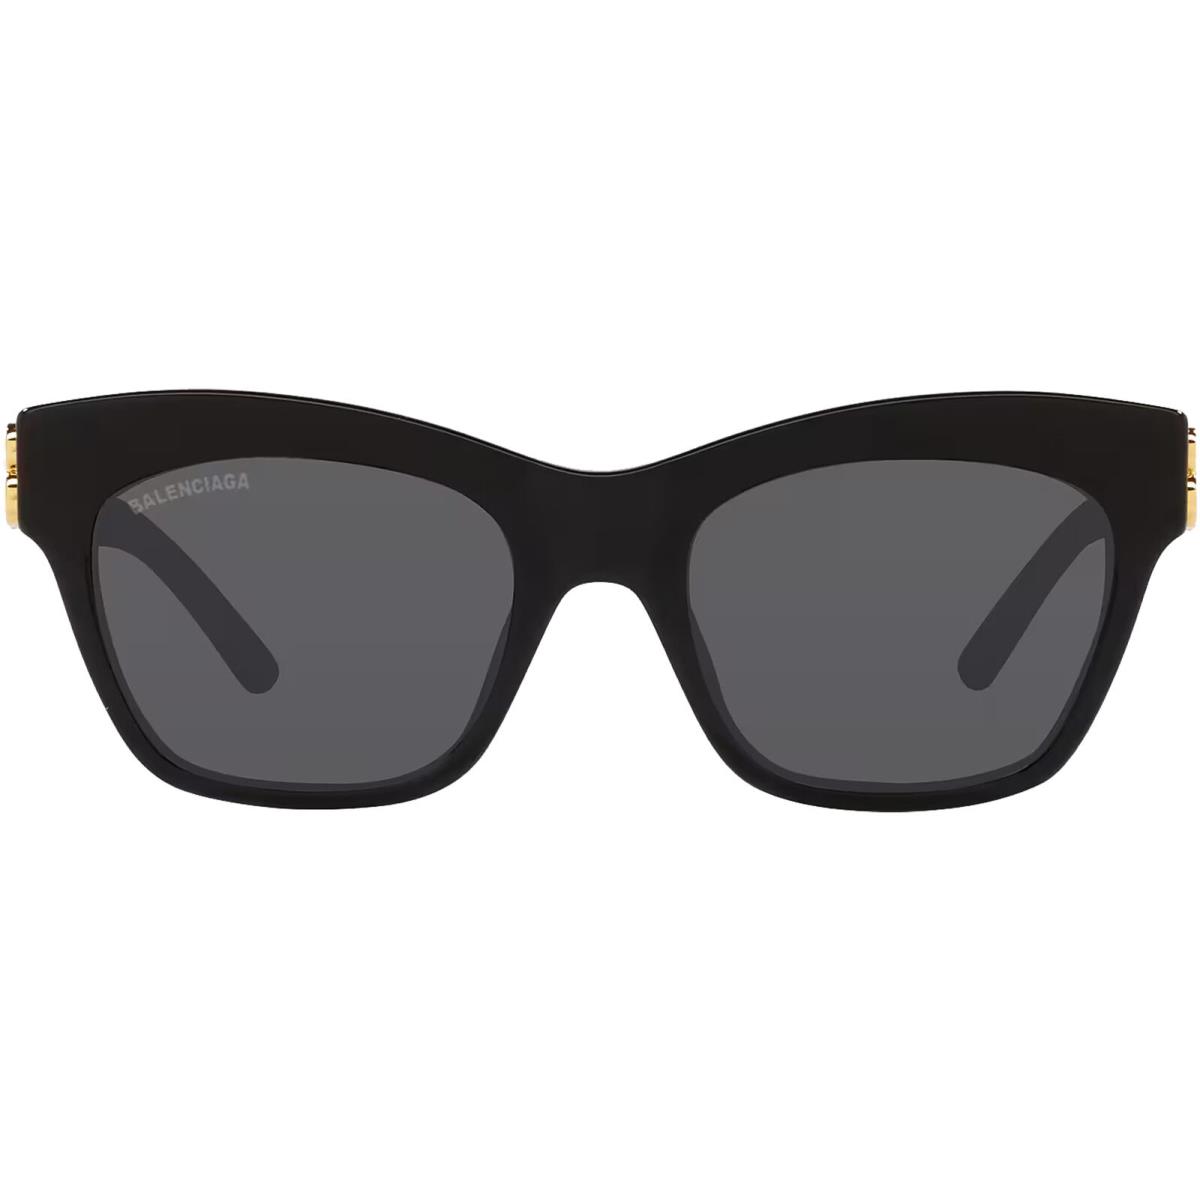 Balenciaga Women`s Black Squared Cat Eye Sunglasses - BB0132S 001 53 - Italy